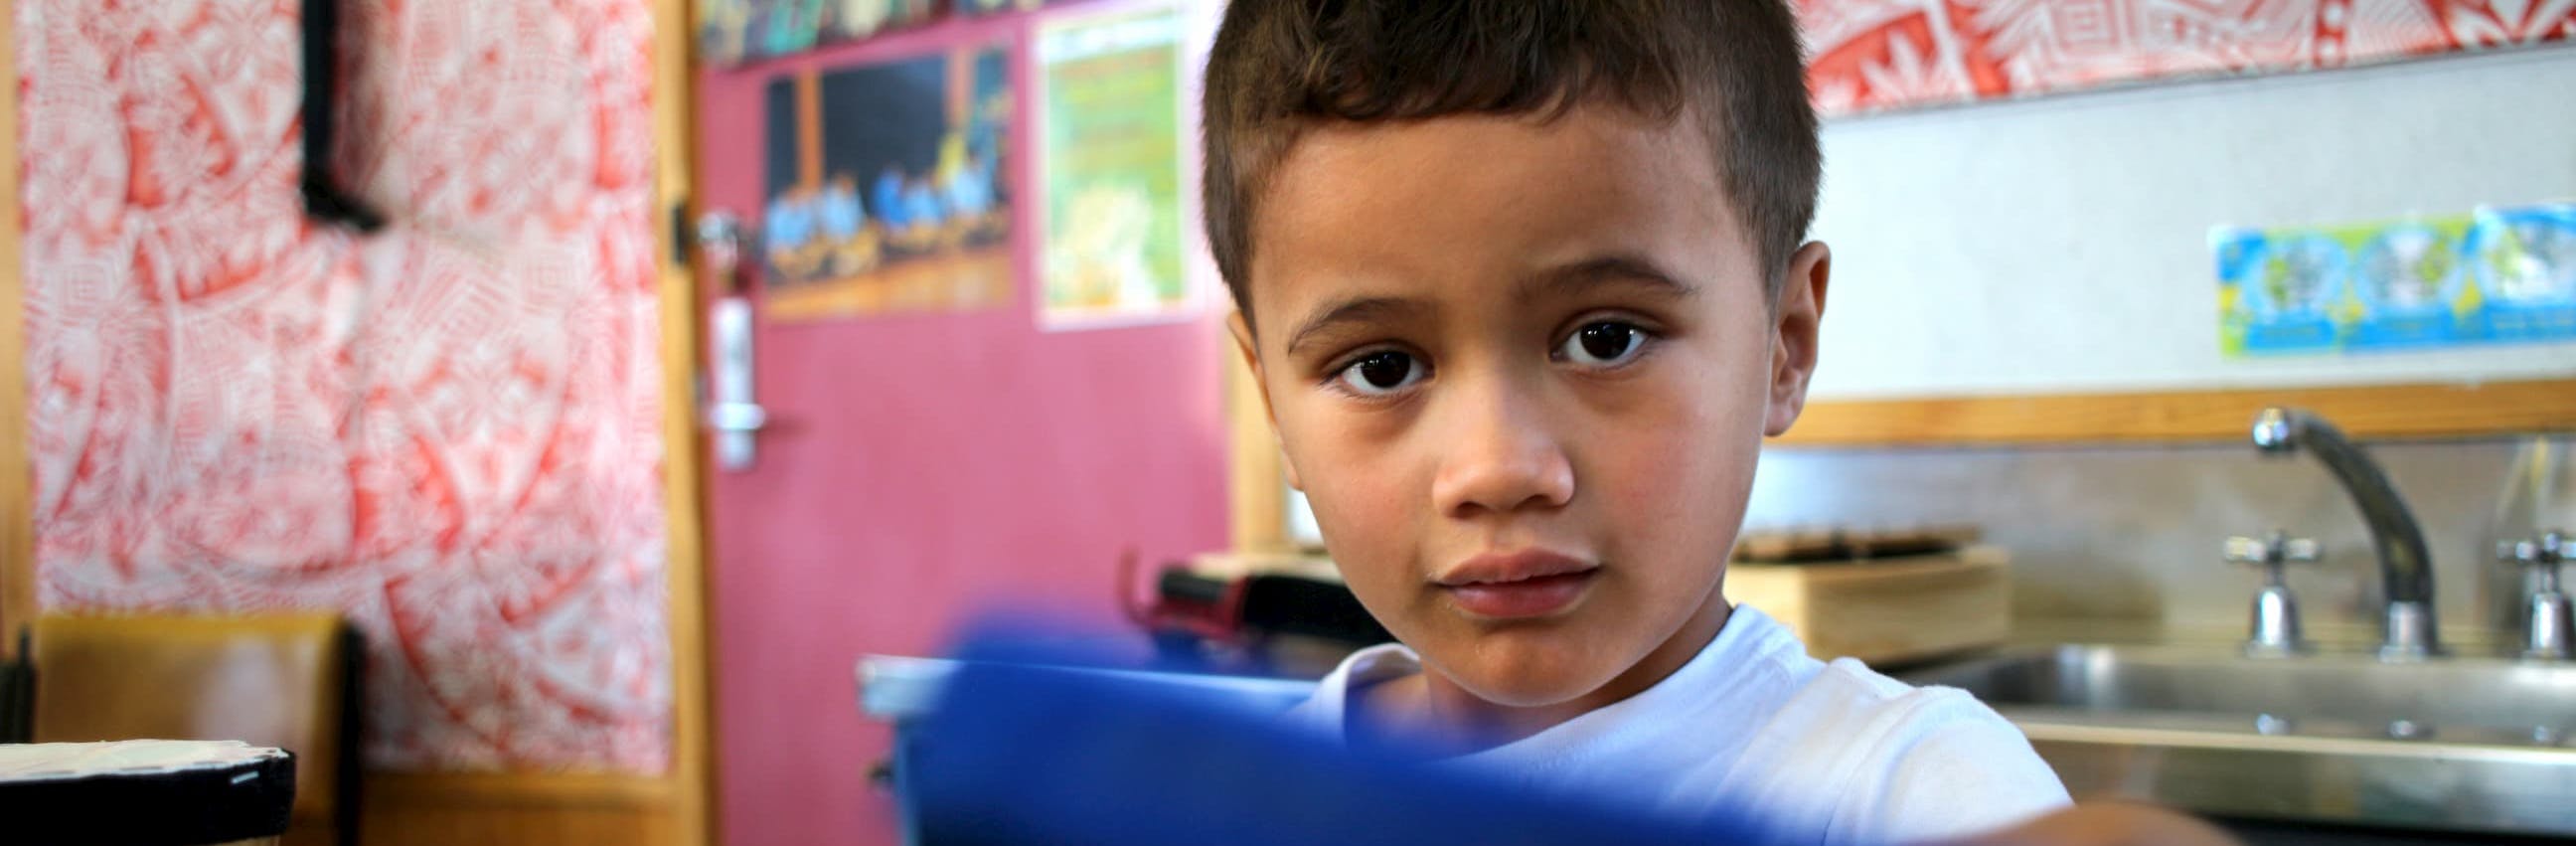 A wellbeing model for tamariki Māori: Māori children participating in UNICEF's Te Hiringa Tamariki program, radiating hope and positivity